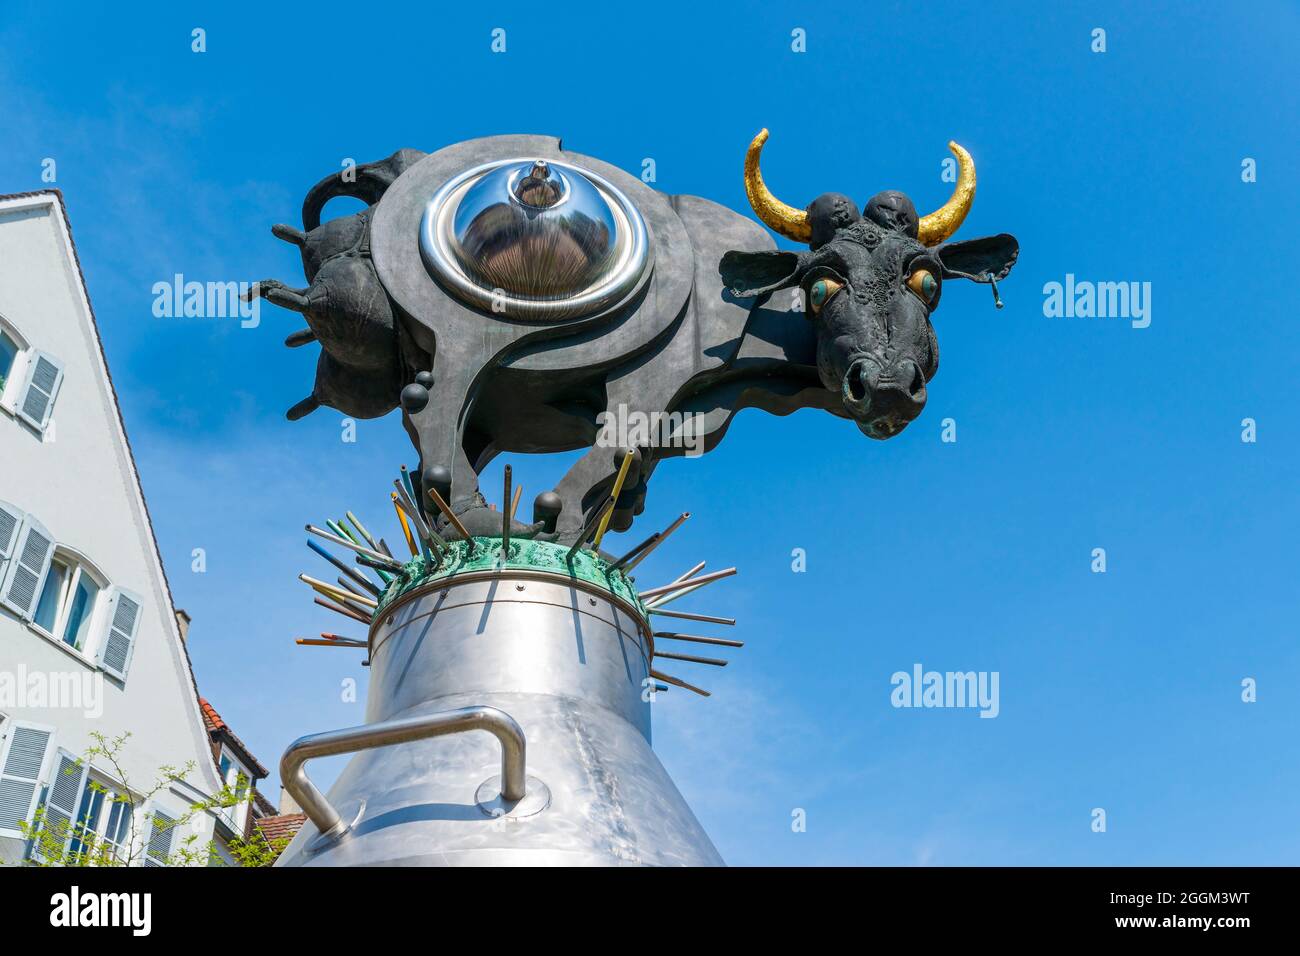 Germany, Baden-Wuerttemberg, Bietigheim-Bissingen, Ku (h) riosum, fountain in the form of a cow on a milk can, work of art by sculptor Jürgen Goertz. Stock Photo